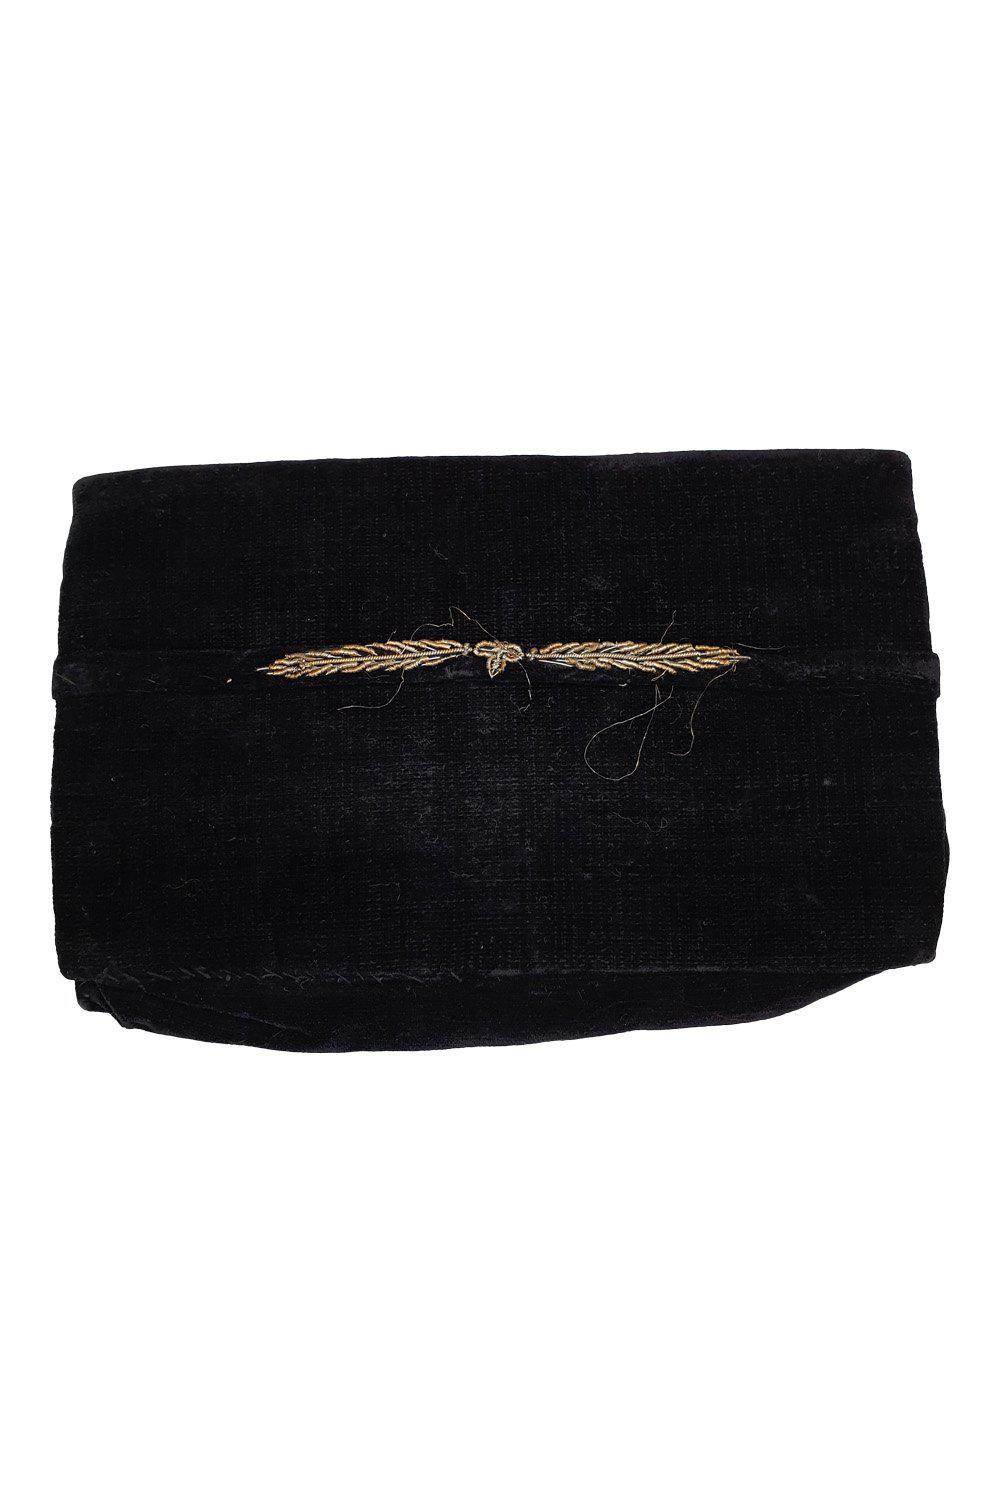 VINTAGE 1930s Black Velvet Handmade Embroidered Floral Zardozi Clutch Evening Bag (S)-Unbranded-The Freperie